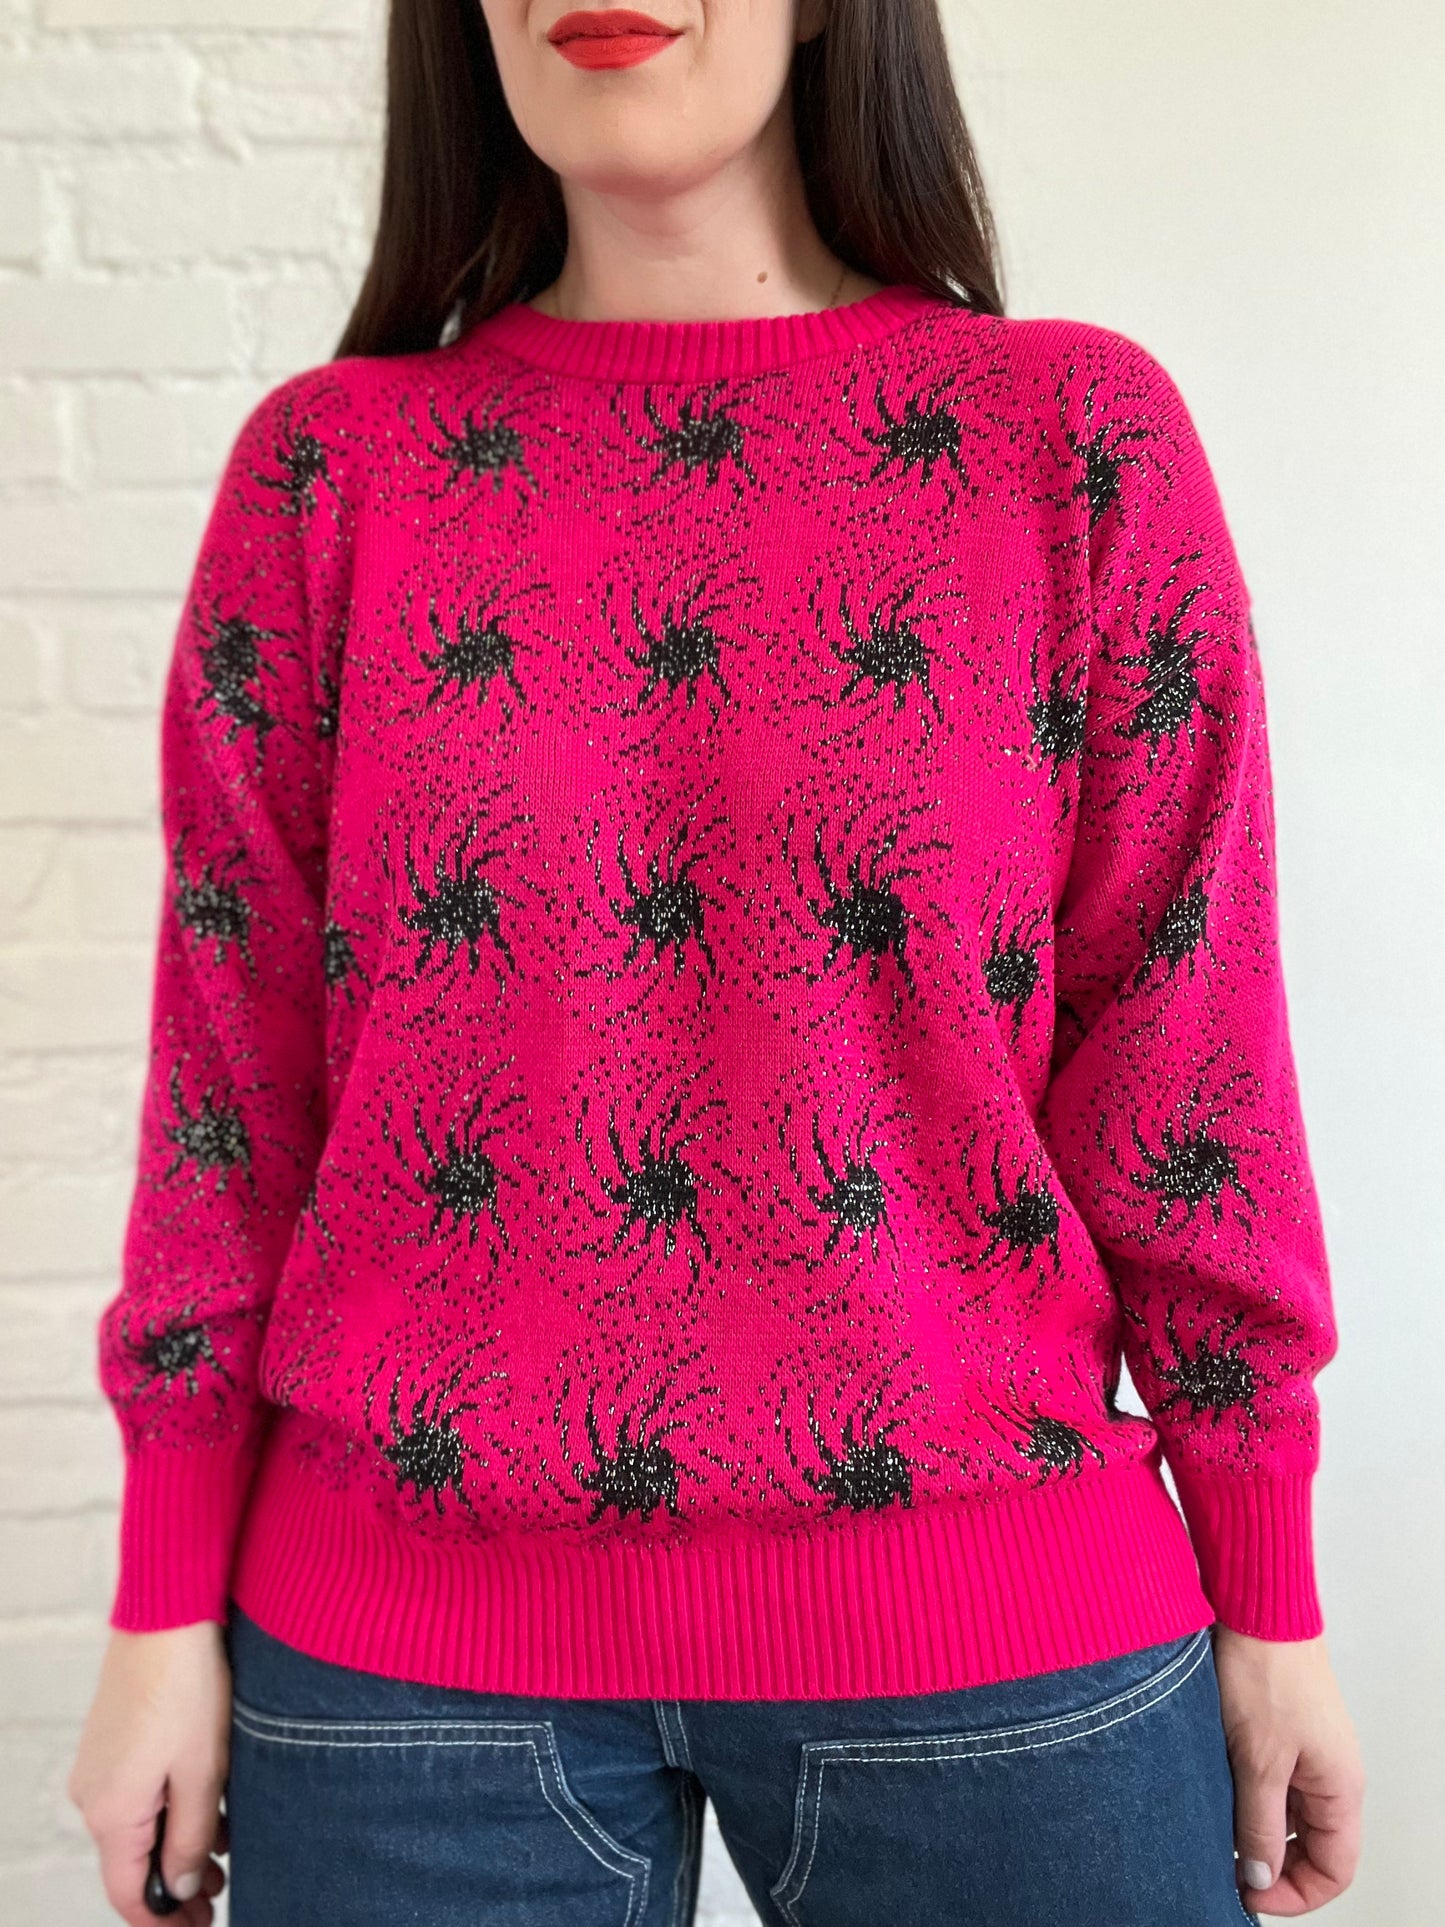 Bombshell Pink Knit Sweater - M